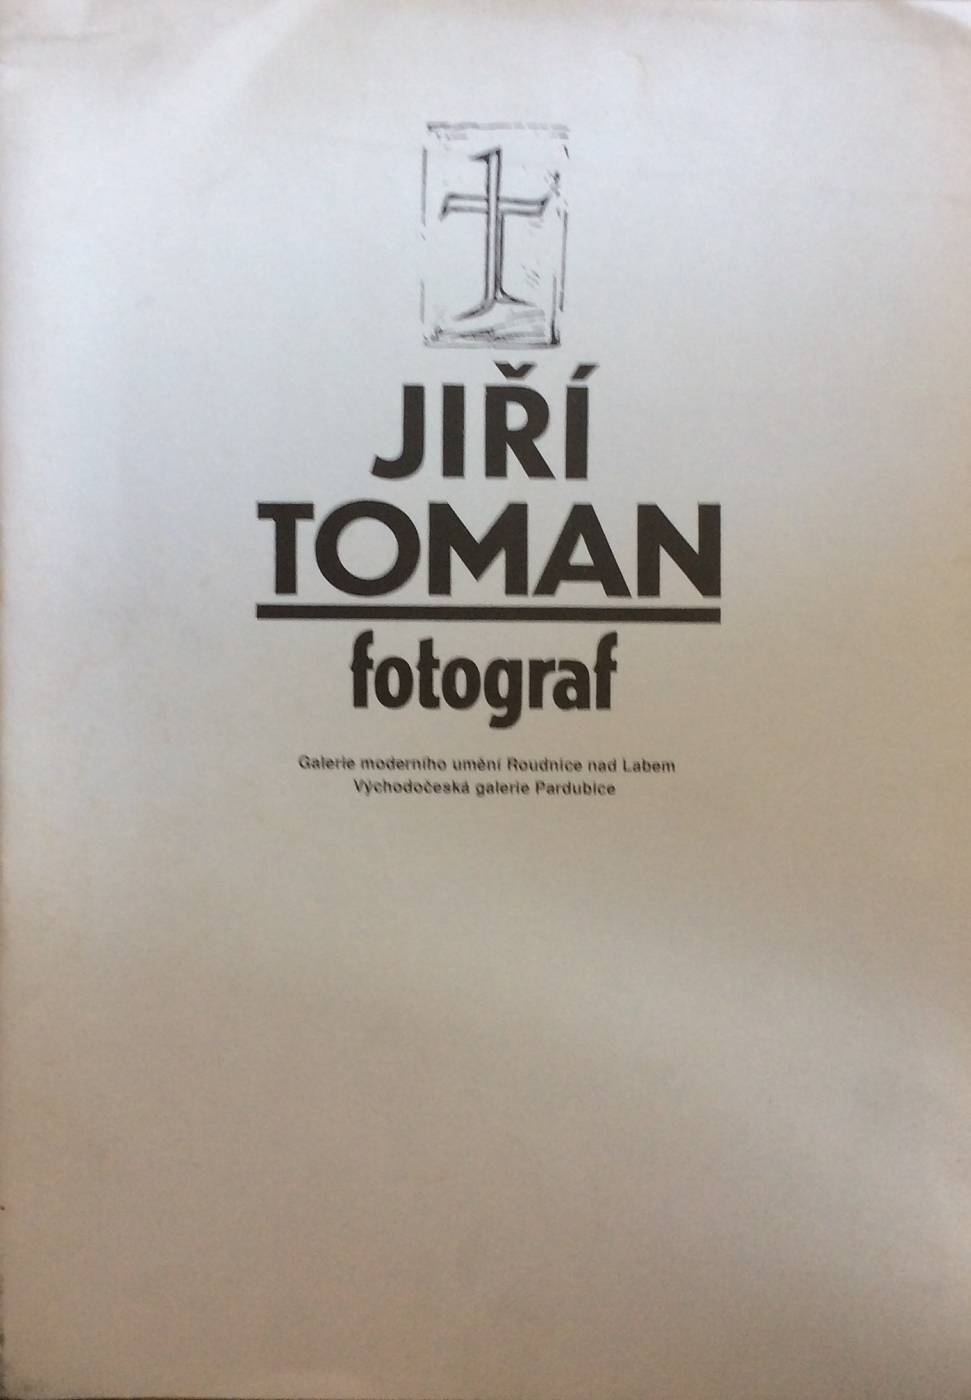 Jiří Toman fotograf